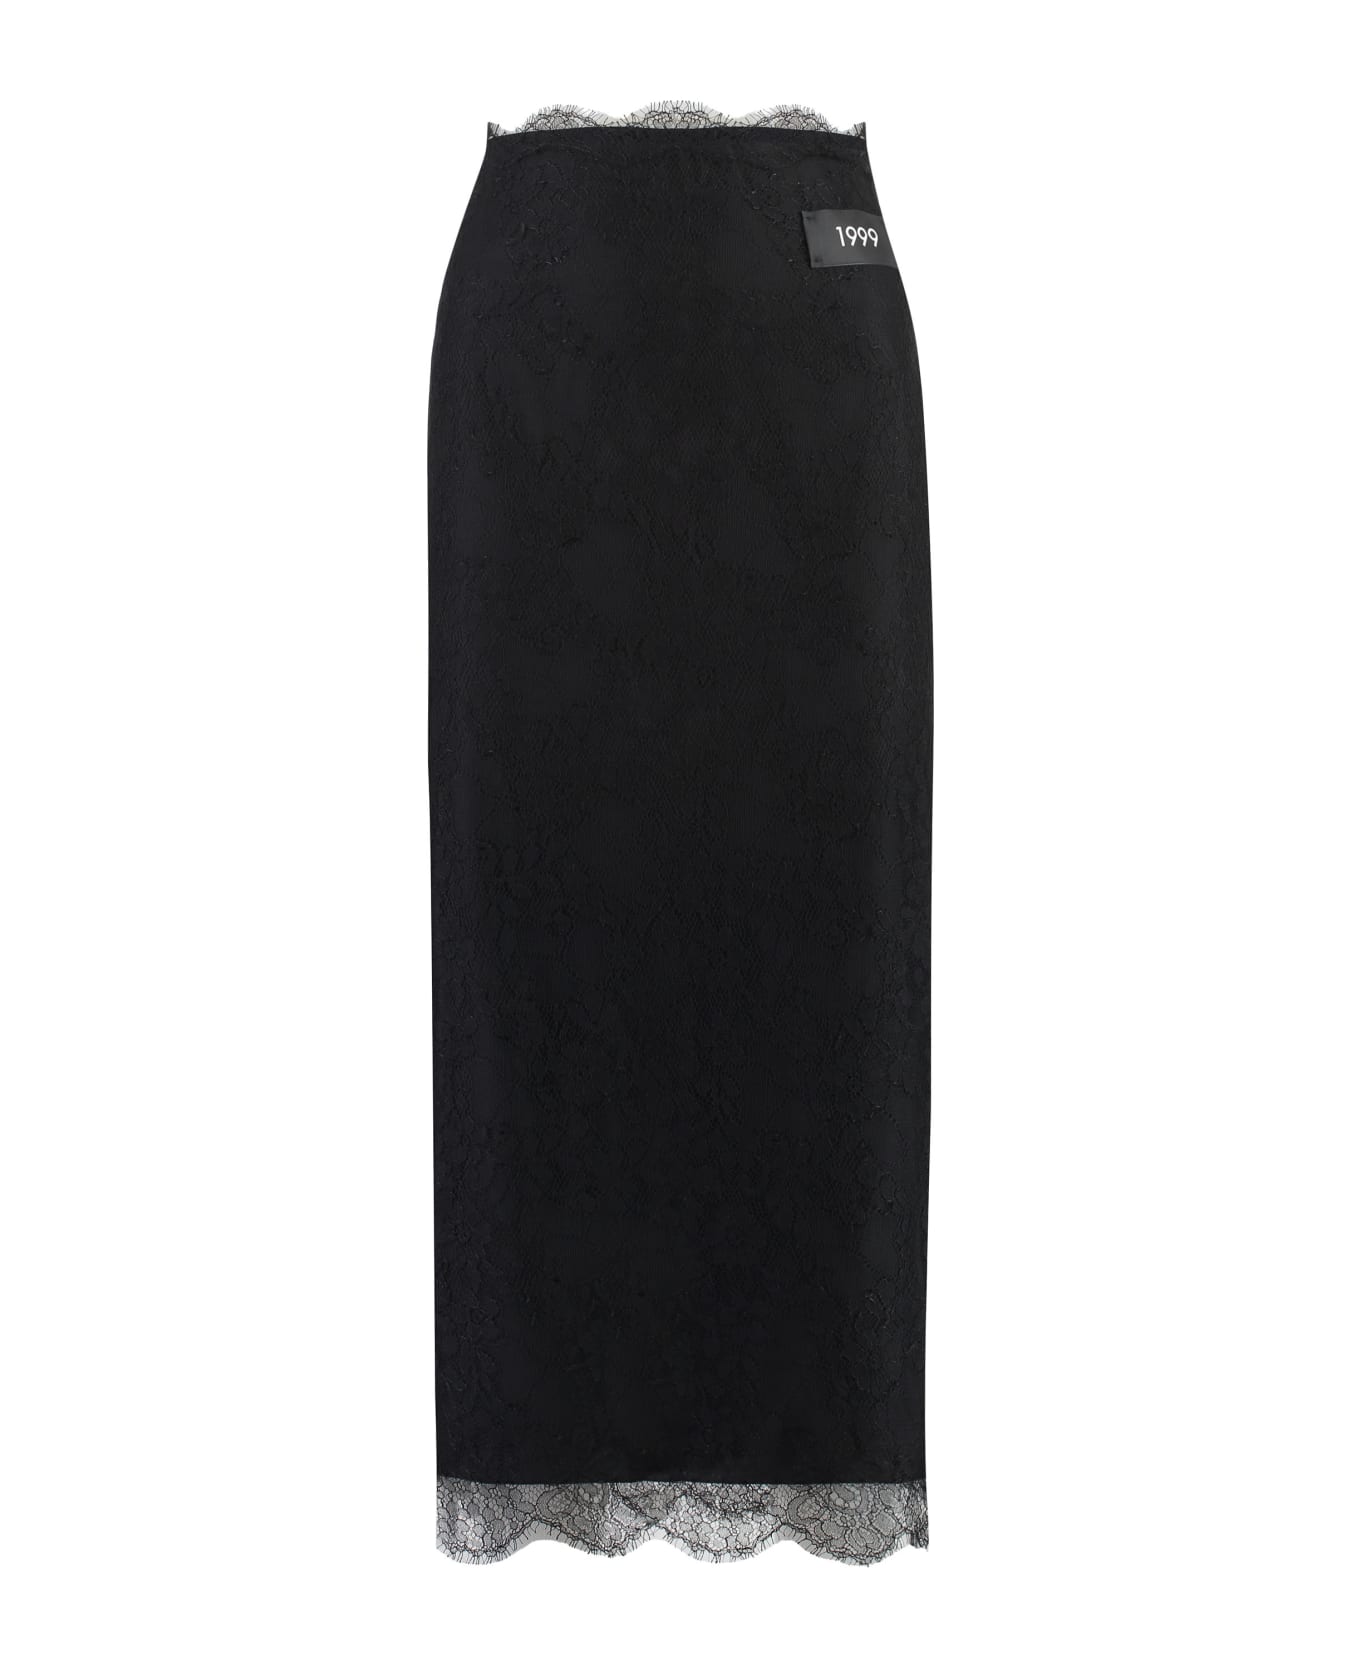 Dolce & Gabbana Lace Pencil Skirt - black